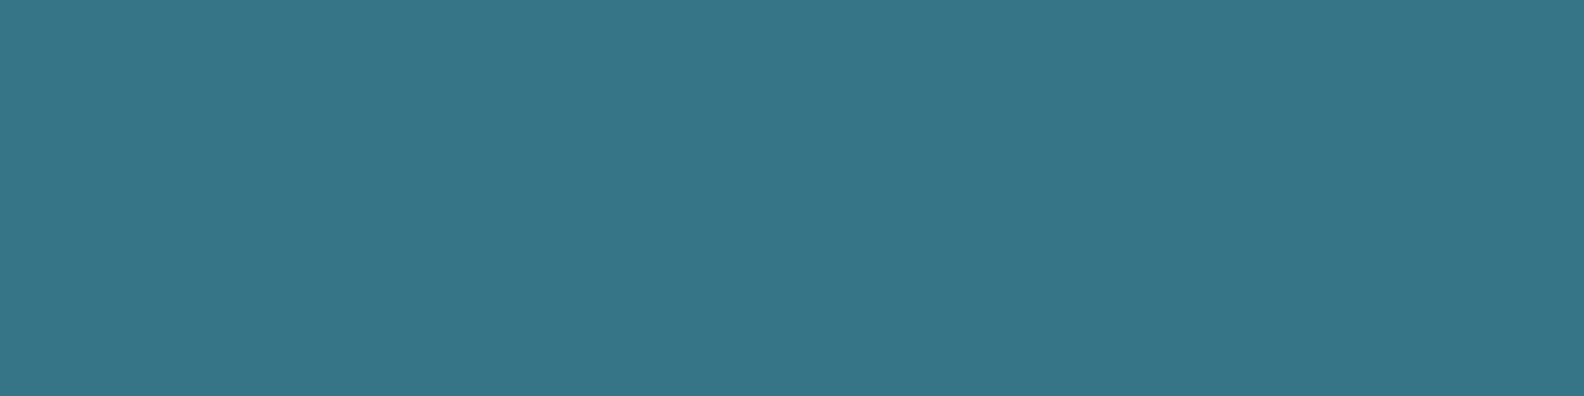 1584x396 Teal Blue Solid Color Background